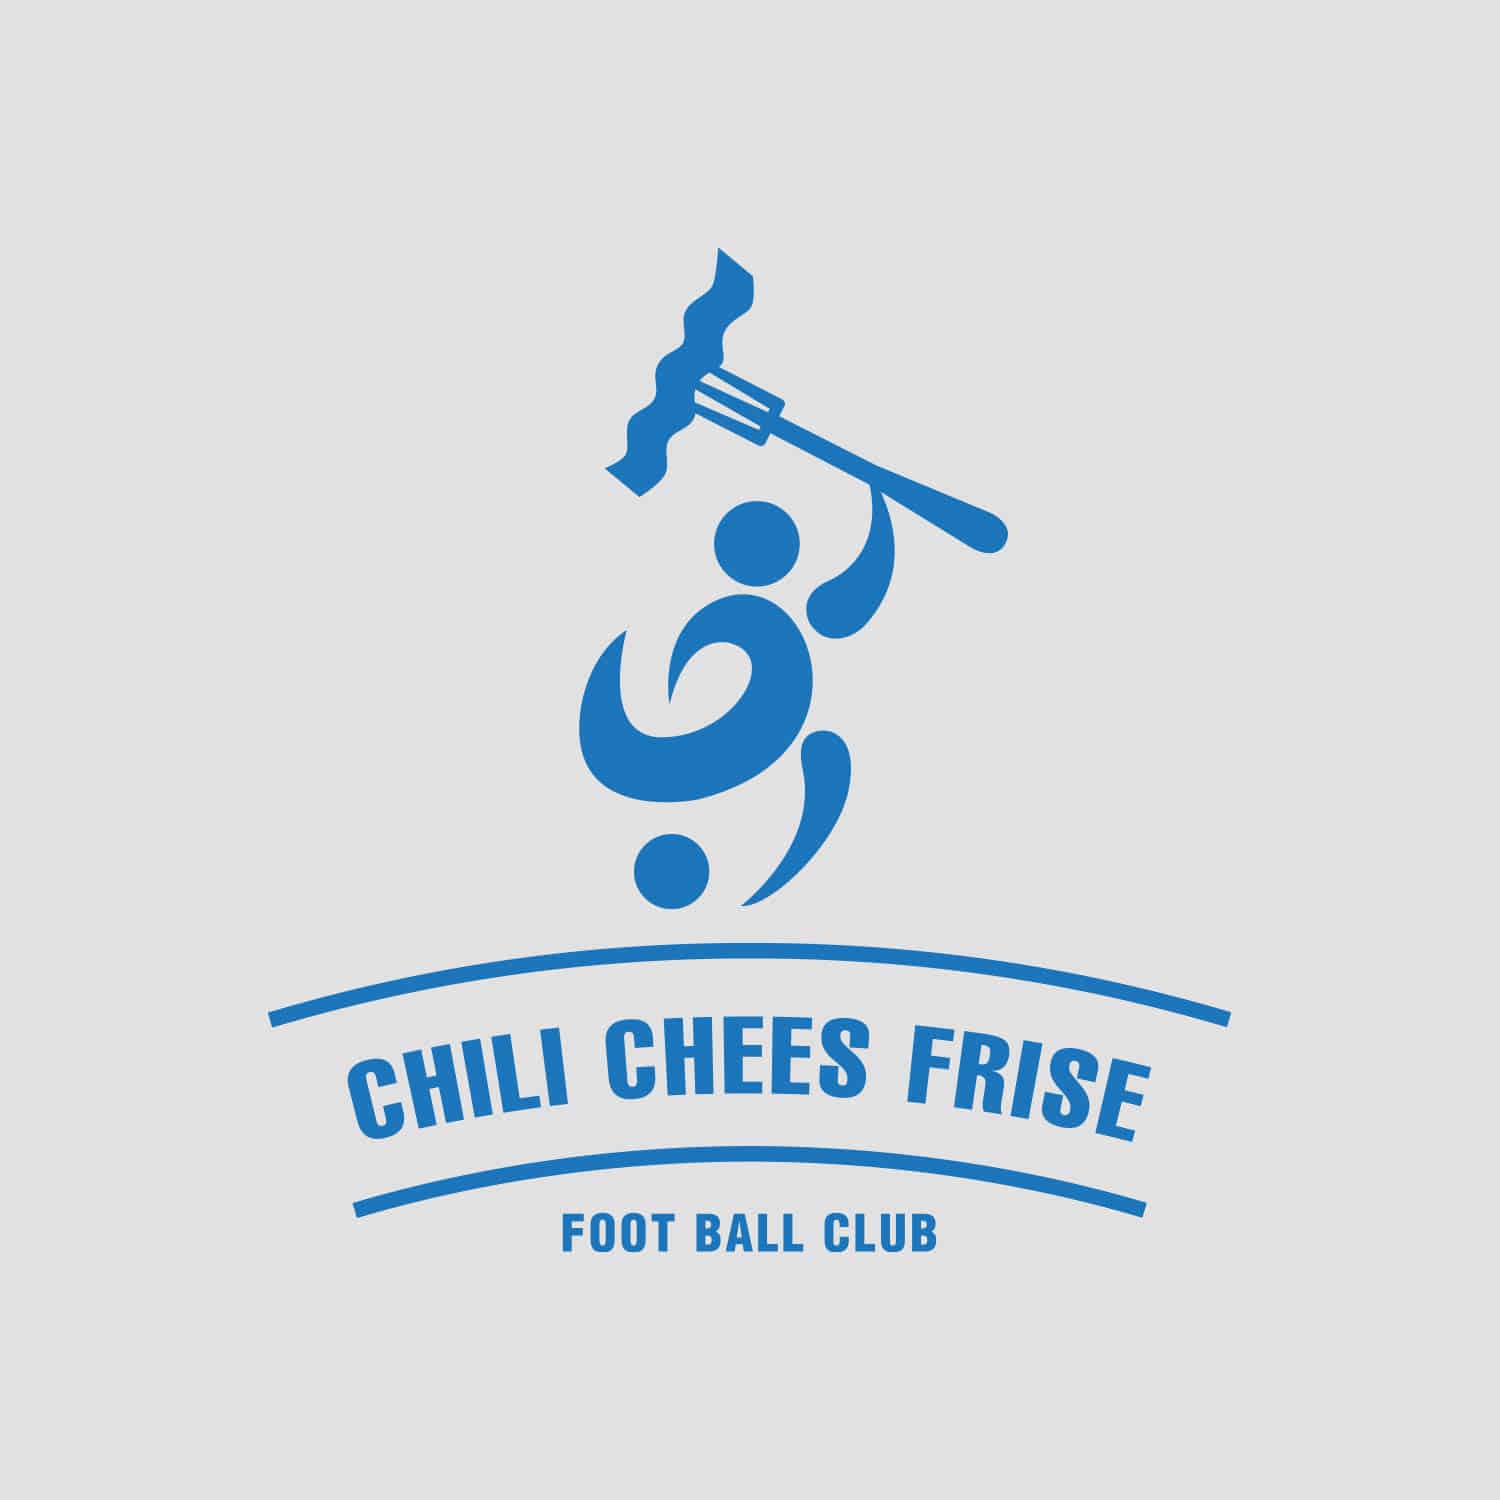 CHILI CHEES FRISE F.C